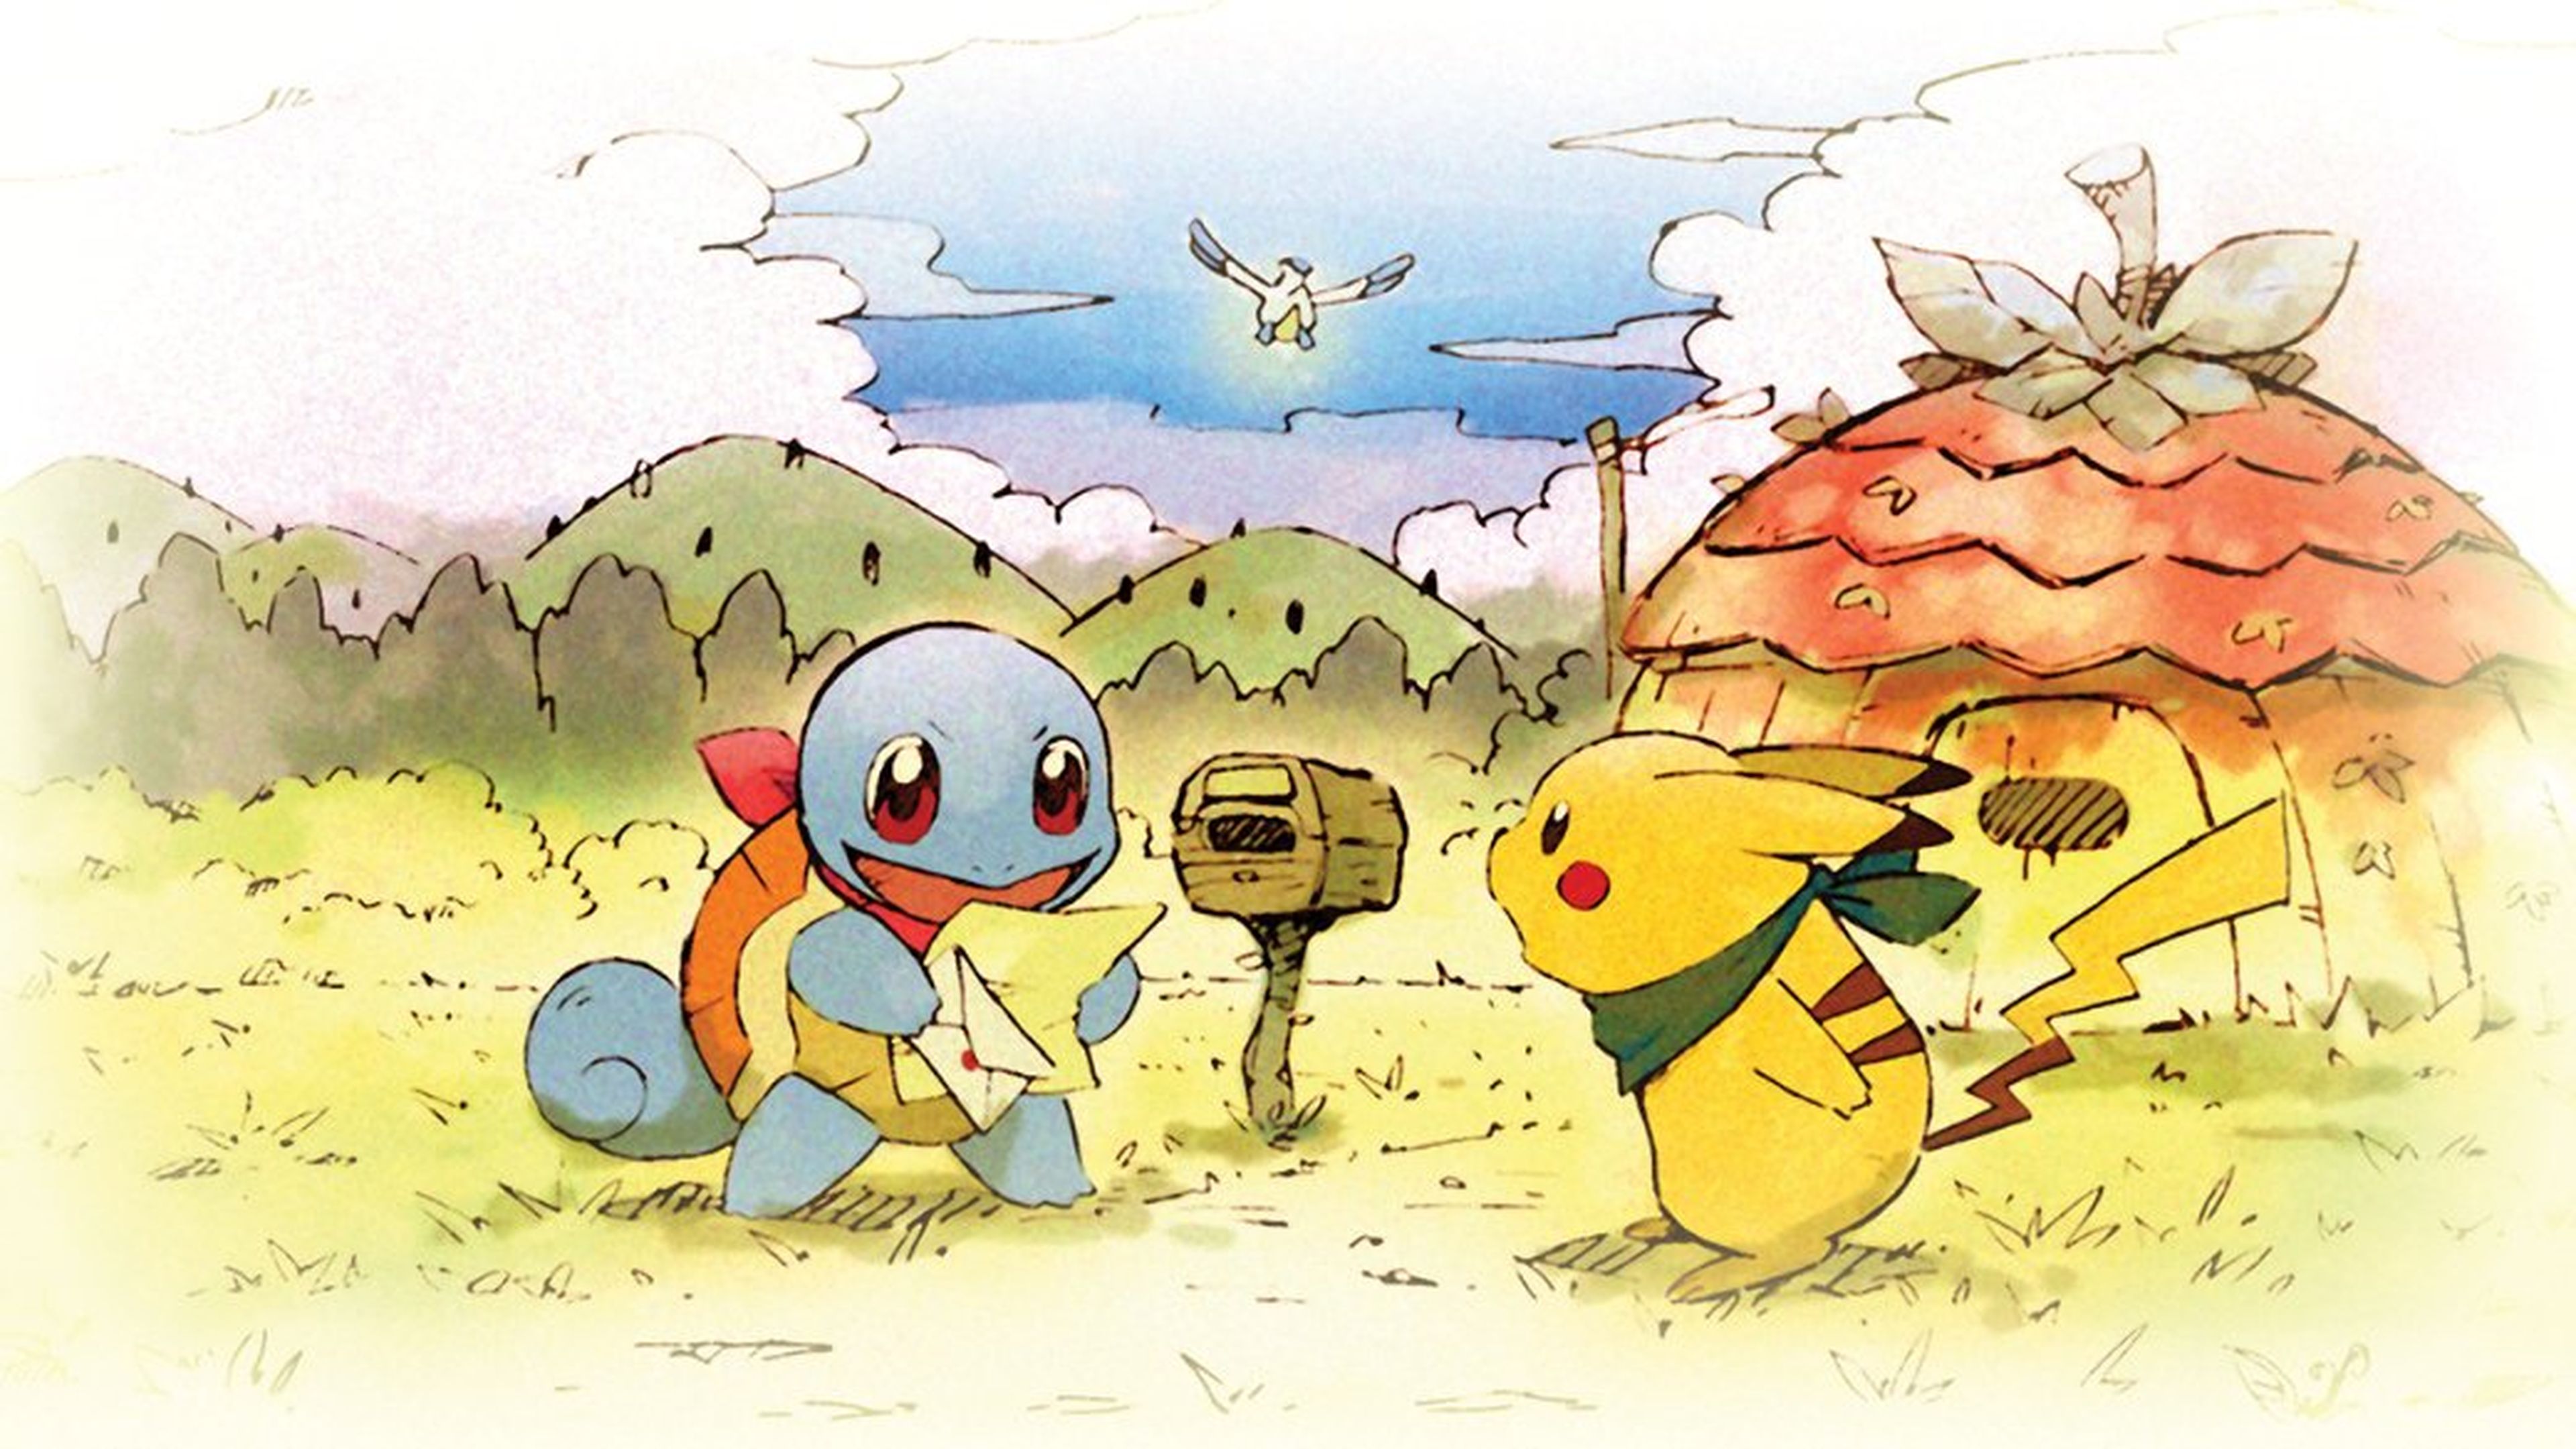 Figura Pokemon Art.Select - Envio Aleatório - Pokémon - Objecto